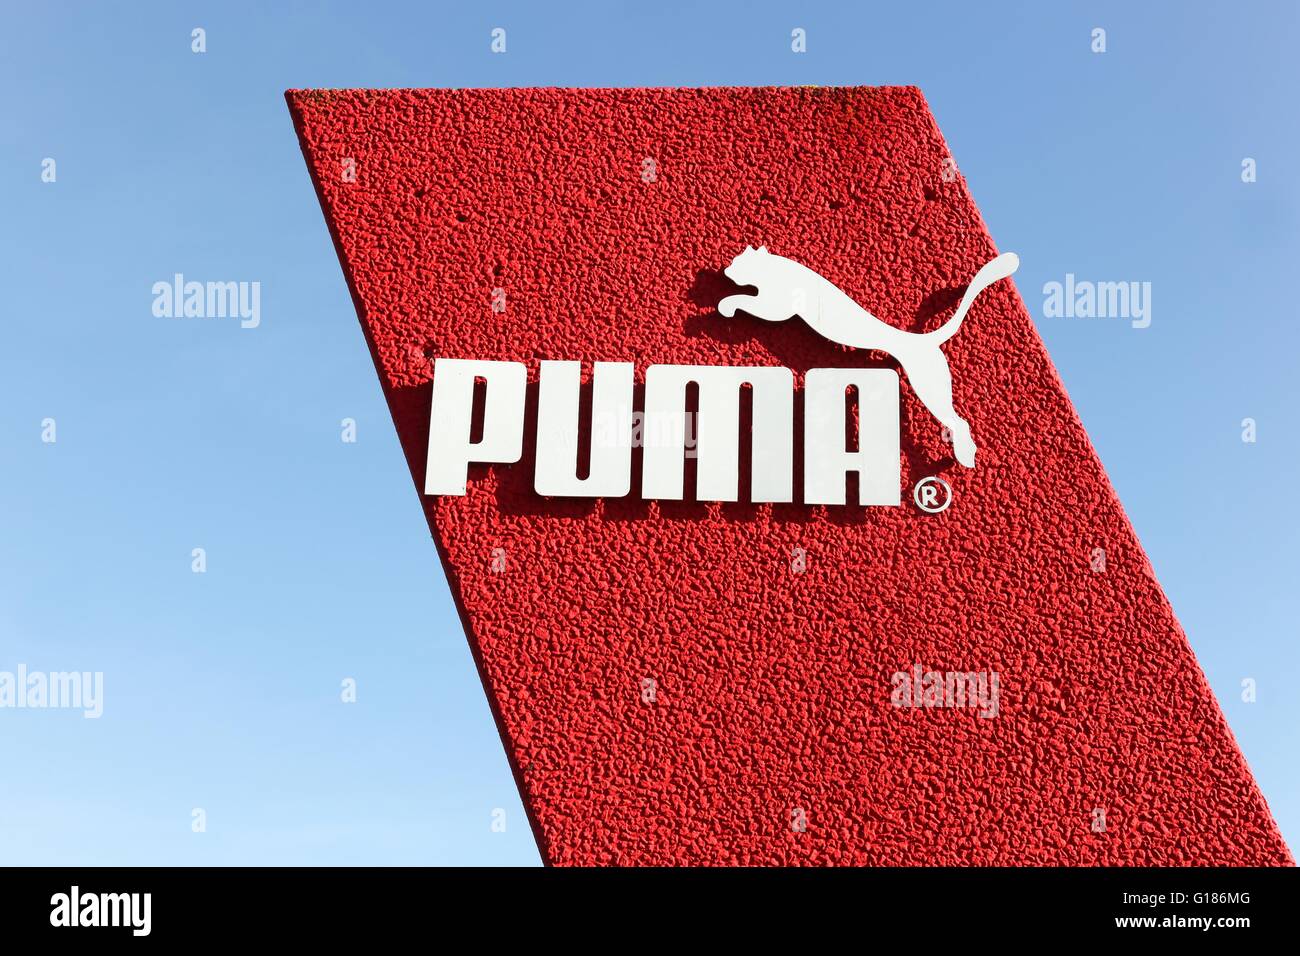 Puma logo on a wall Stock Photo